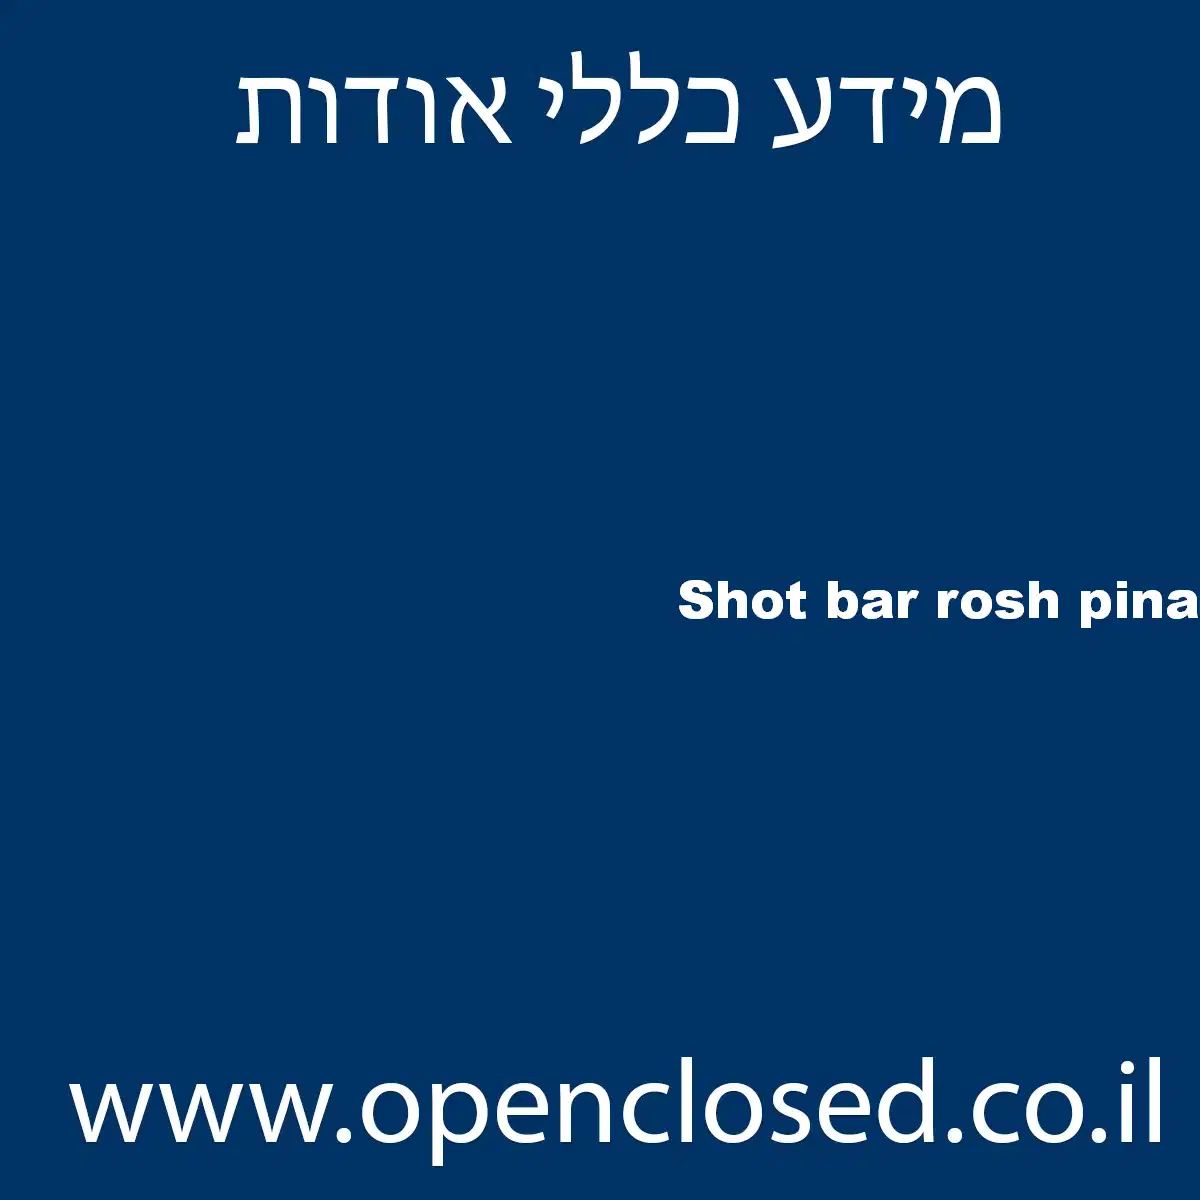 Shot bar rosh pina